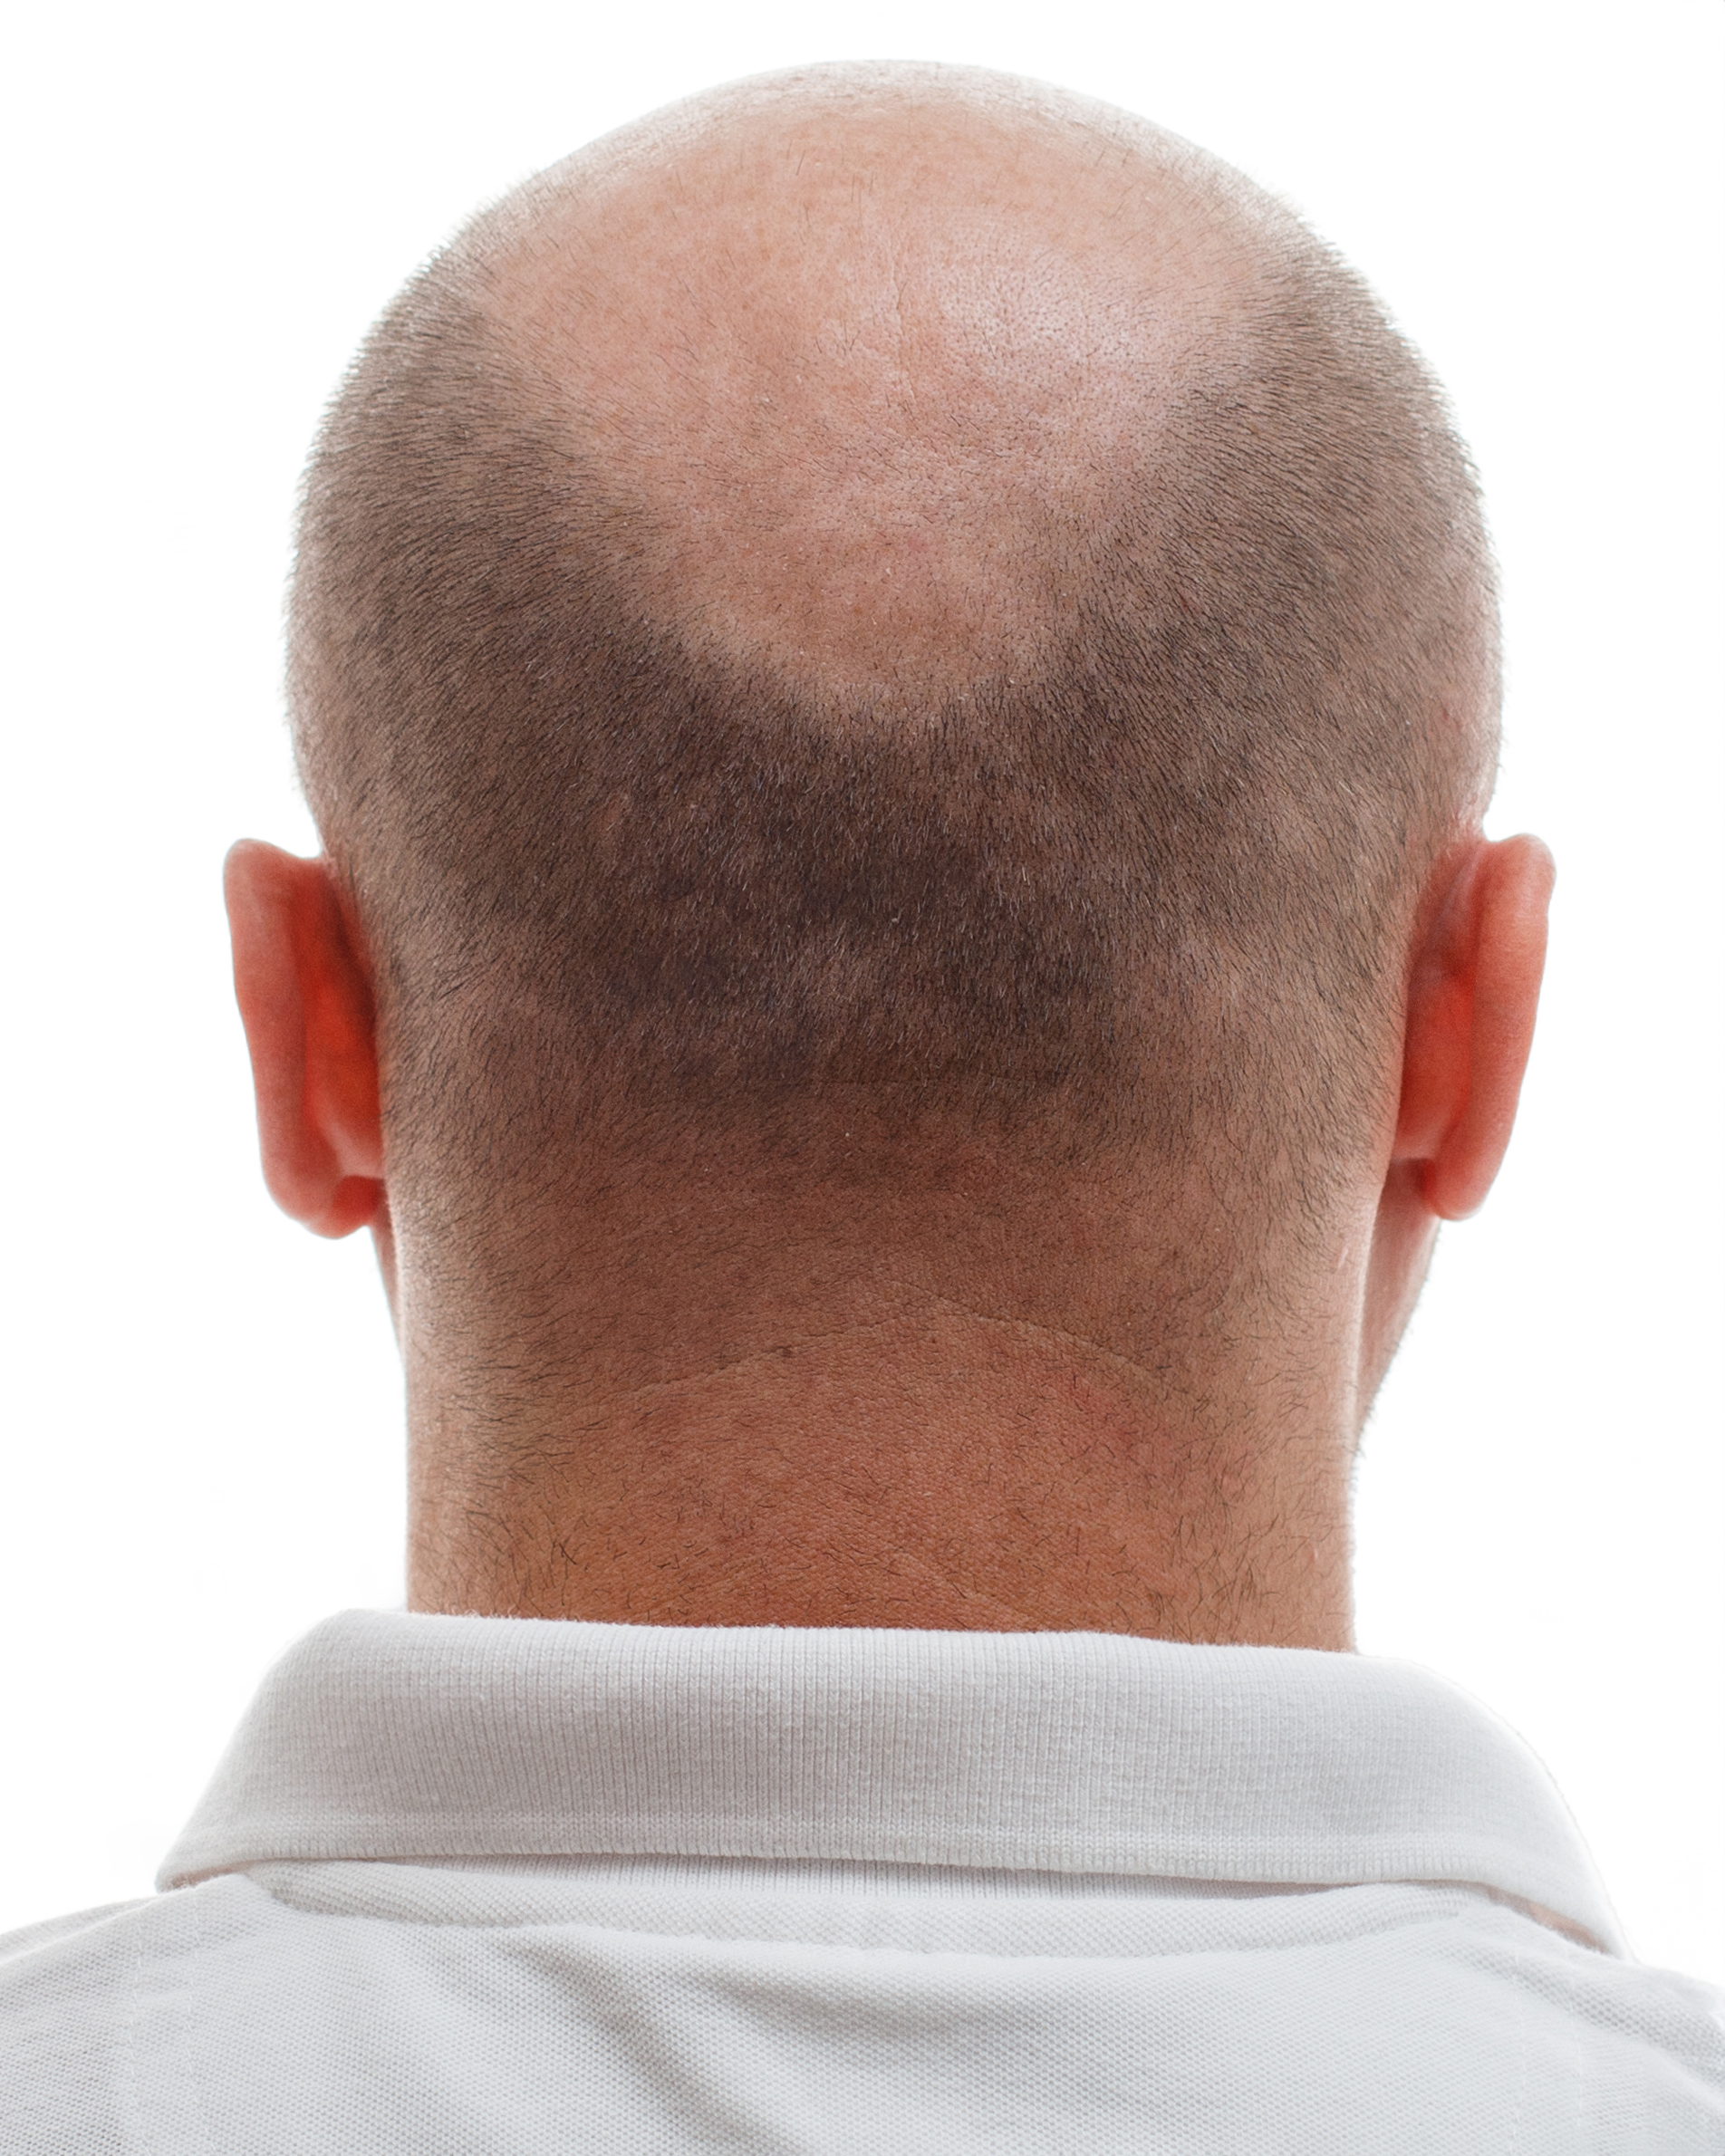 Head Balding Man Before